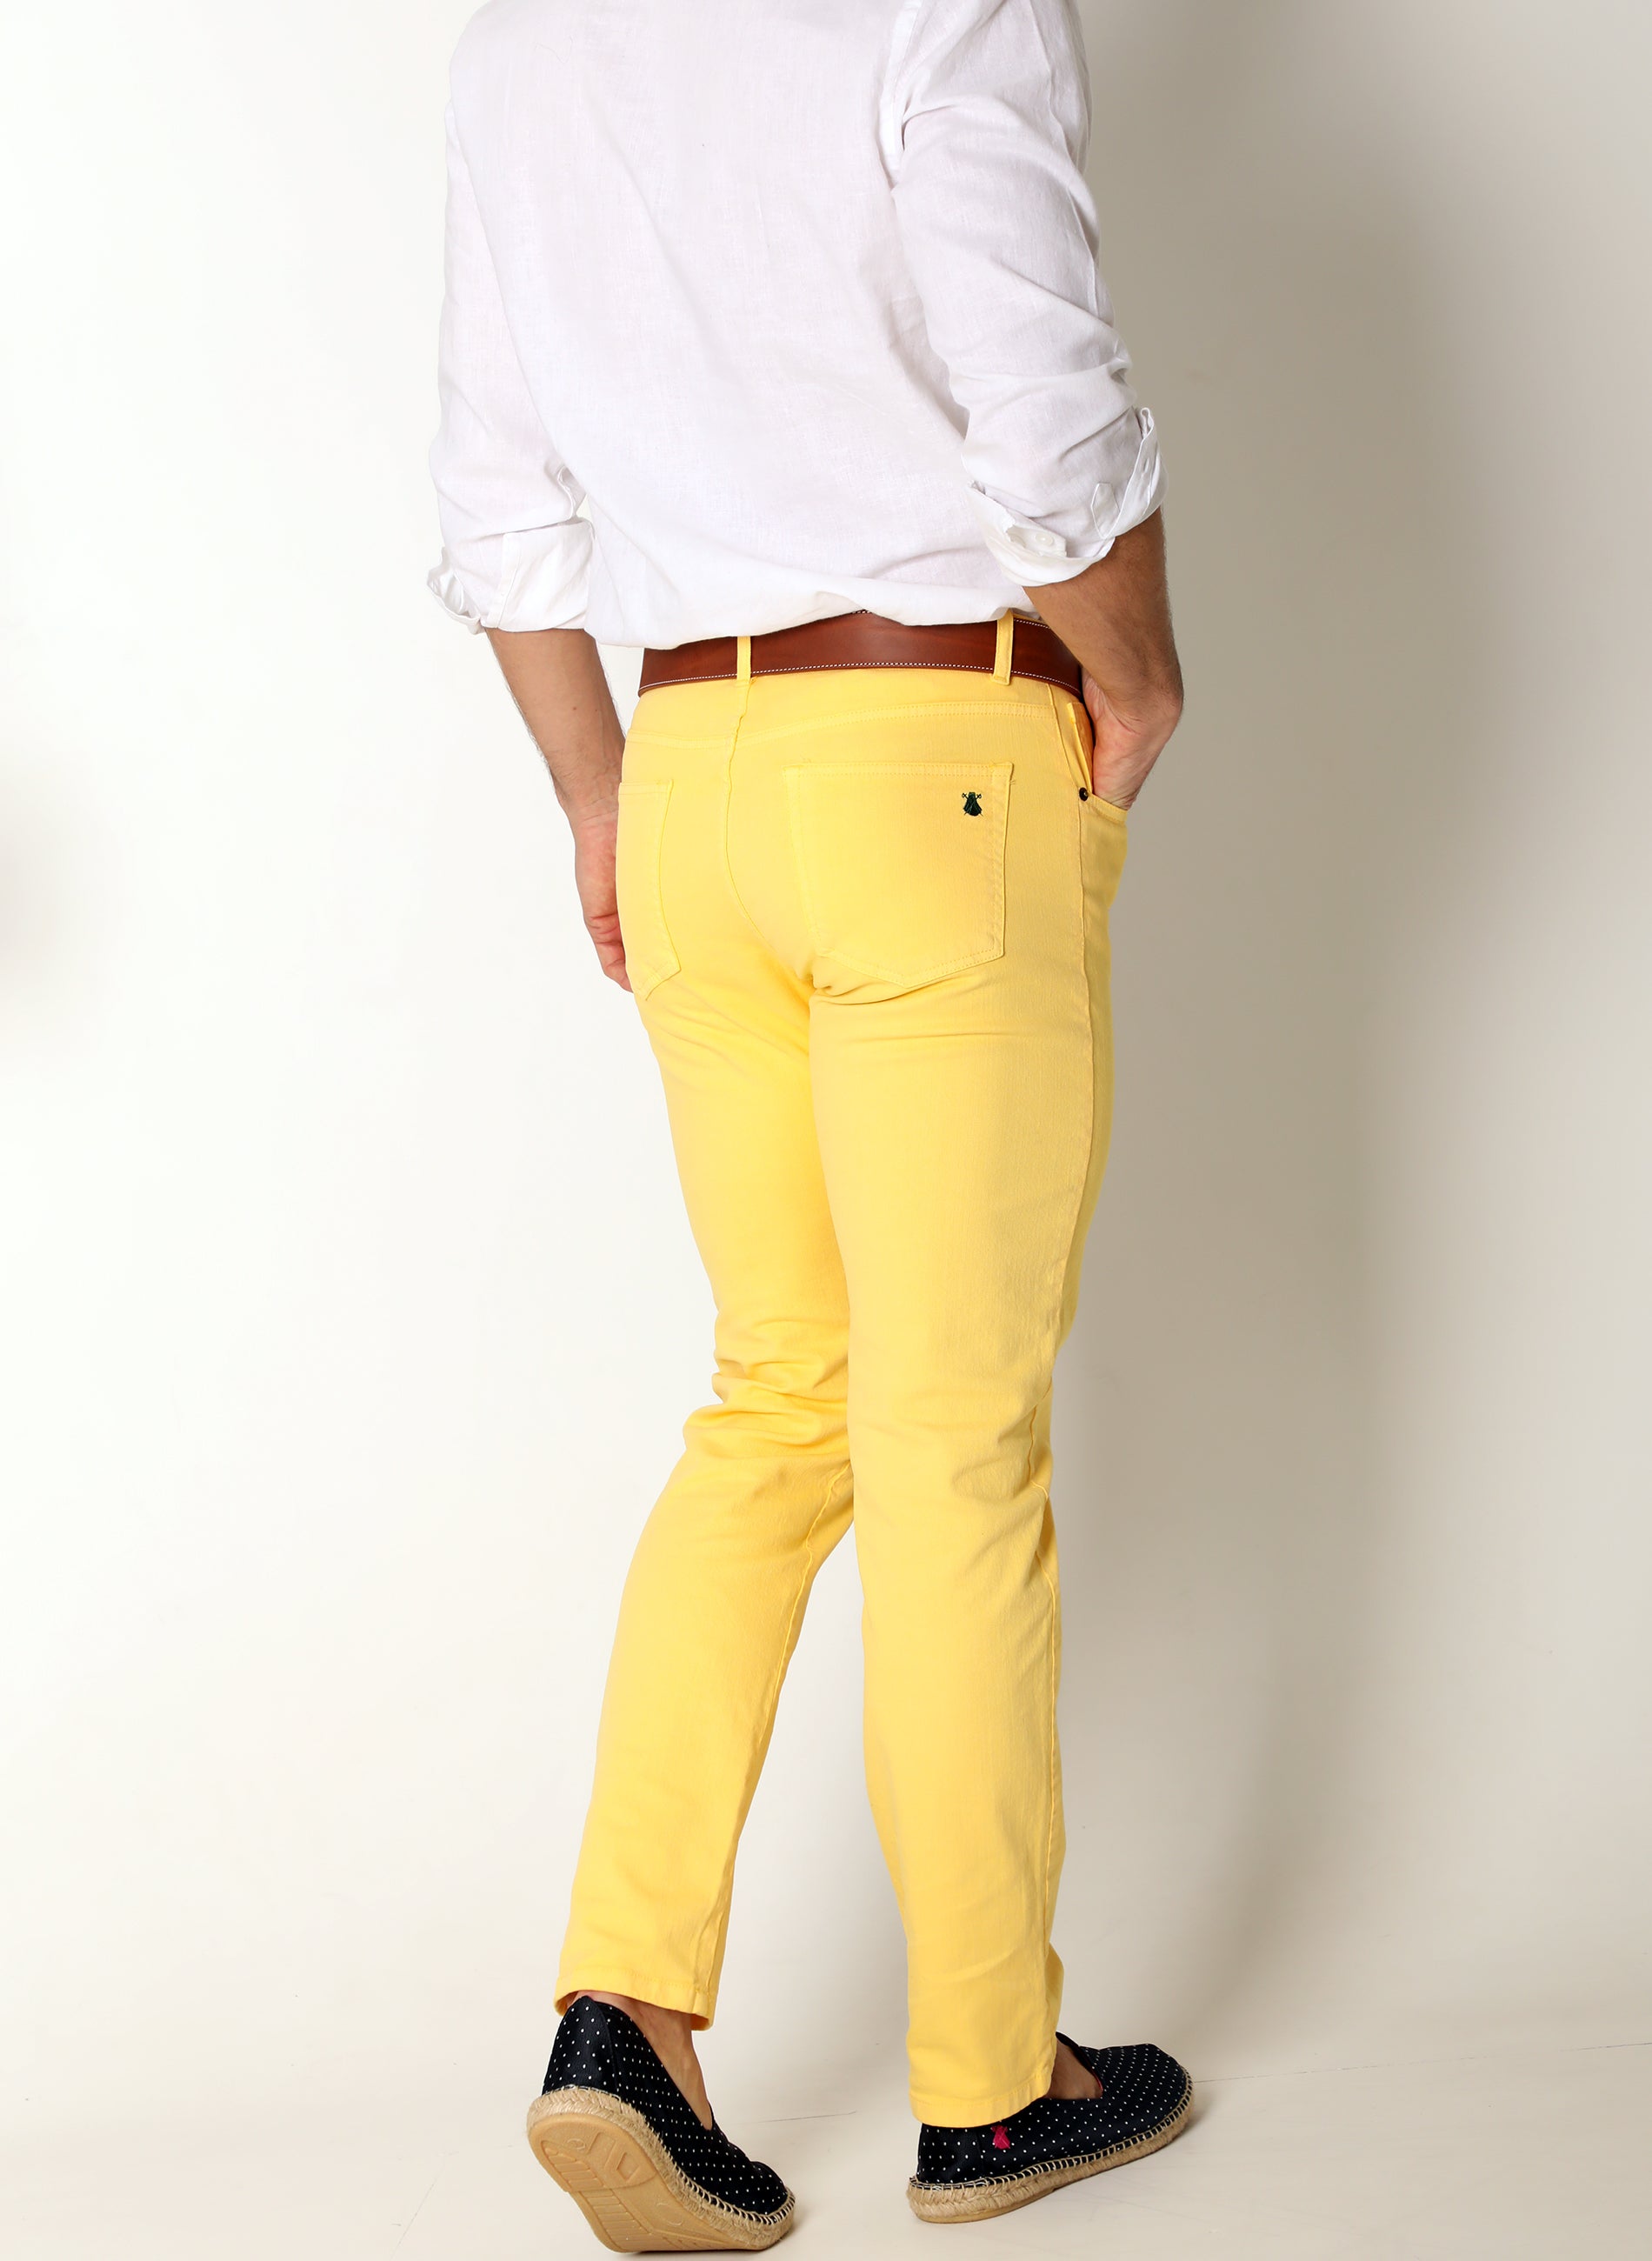 Men's yellow 5-pocket pants